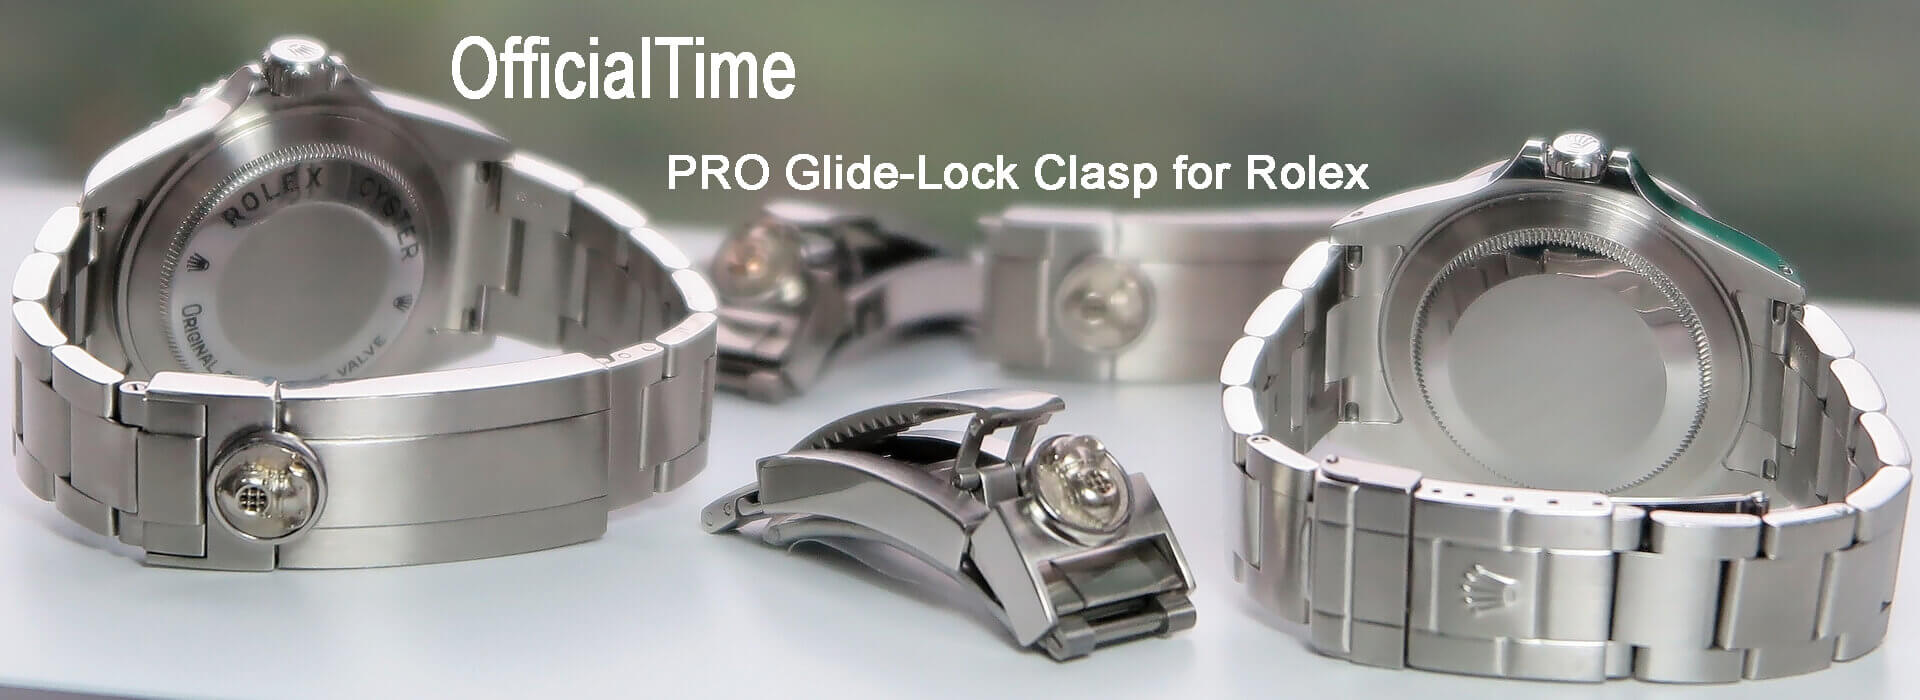 OfficialTime PRO Glide-Lock Clasp